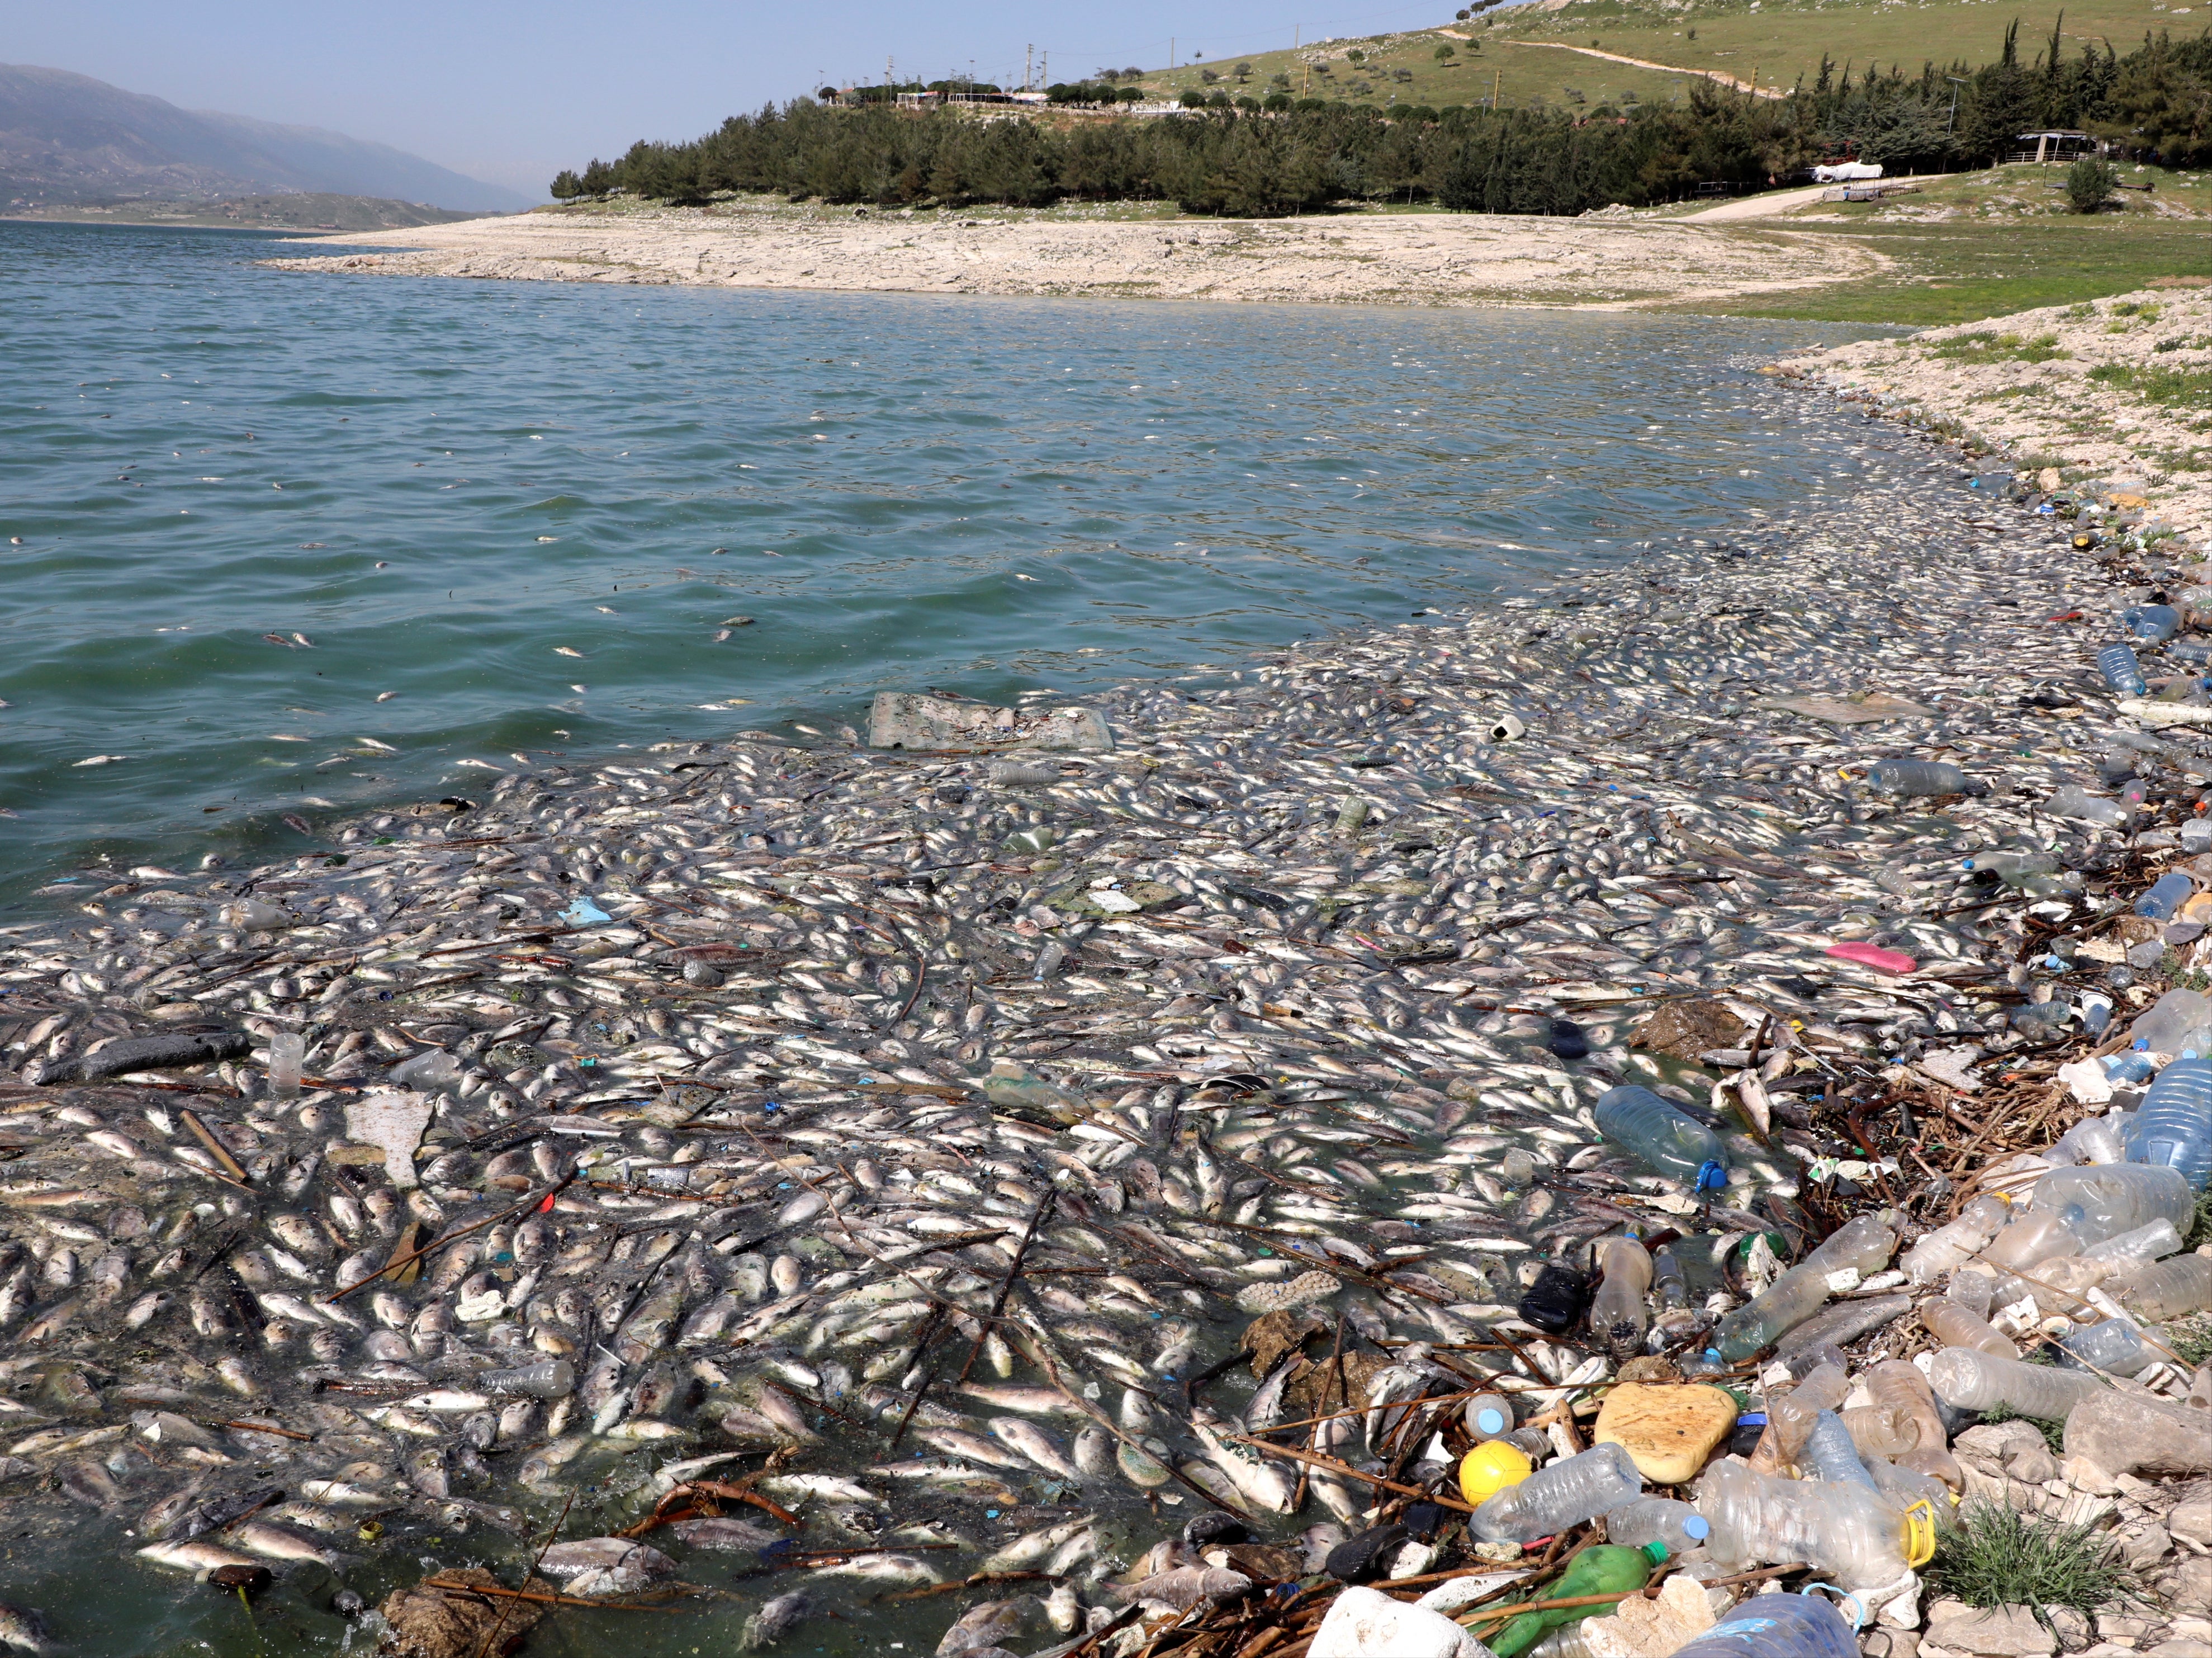 Dead fish float in Lake Qaraoun on the Litani River alongside piles of refuse